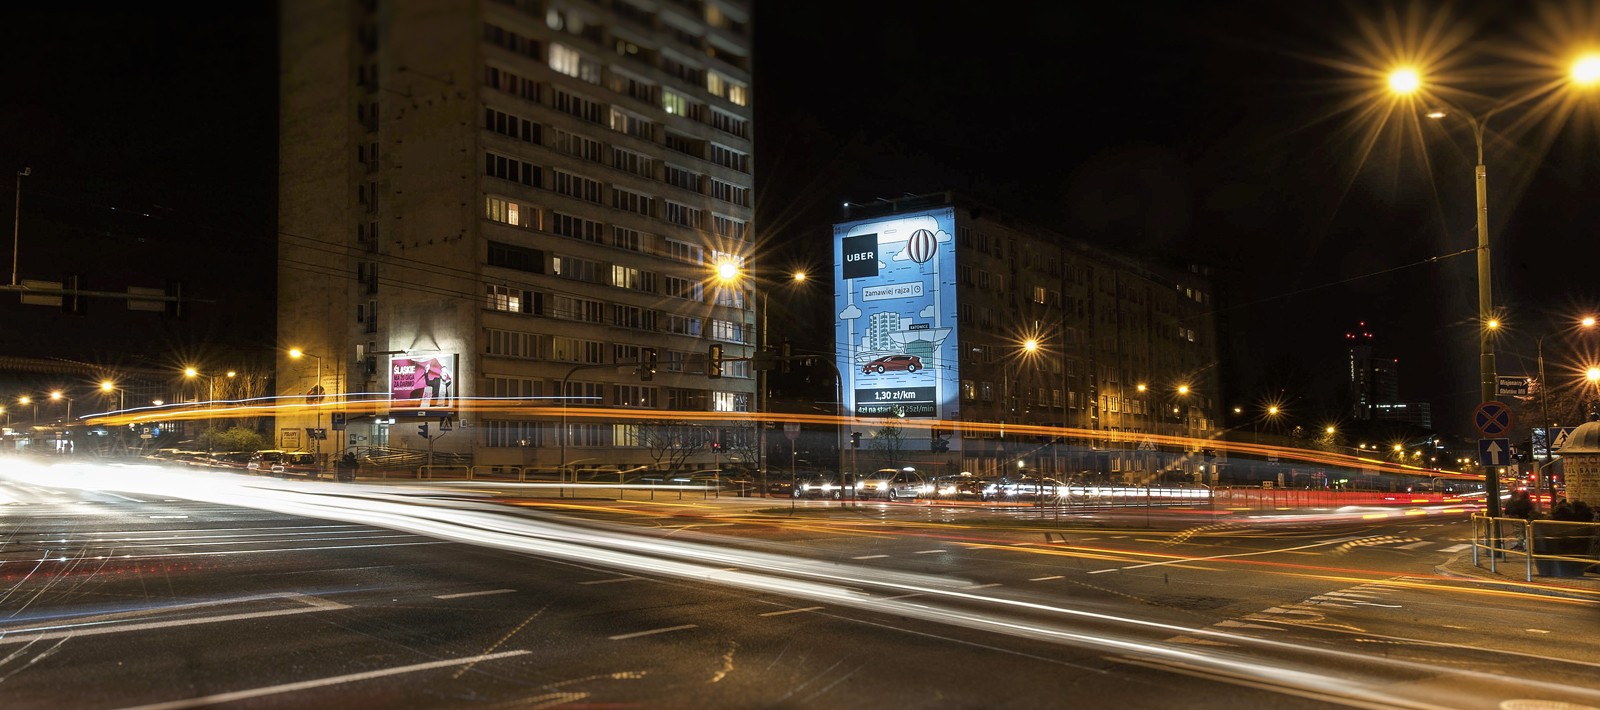 Mural for Uber Poland at 63 Korfantego street in Katowice | Uber Polska na ścianie w Katowicach | Portfolio